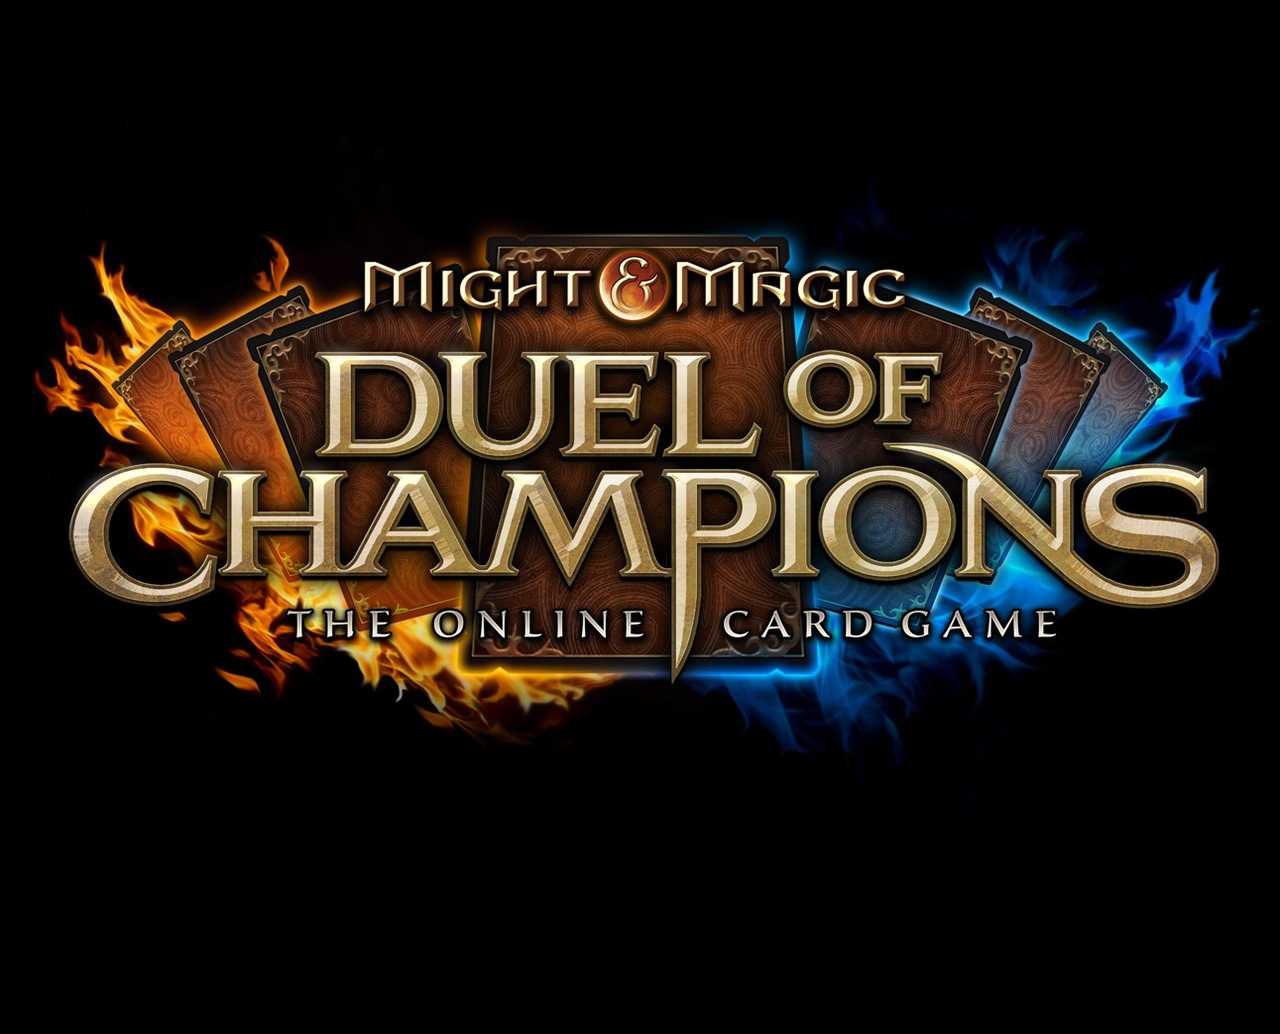 http://image.jeuxvideo.com/images/jaquettes/00044640/jaquette-might-magic-duel-of-champions-pc-cover-avant-g-1335207895.jpg